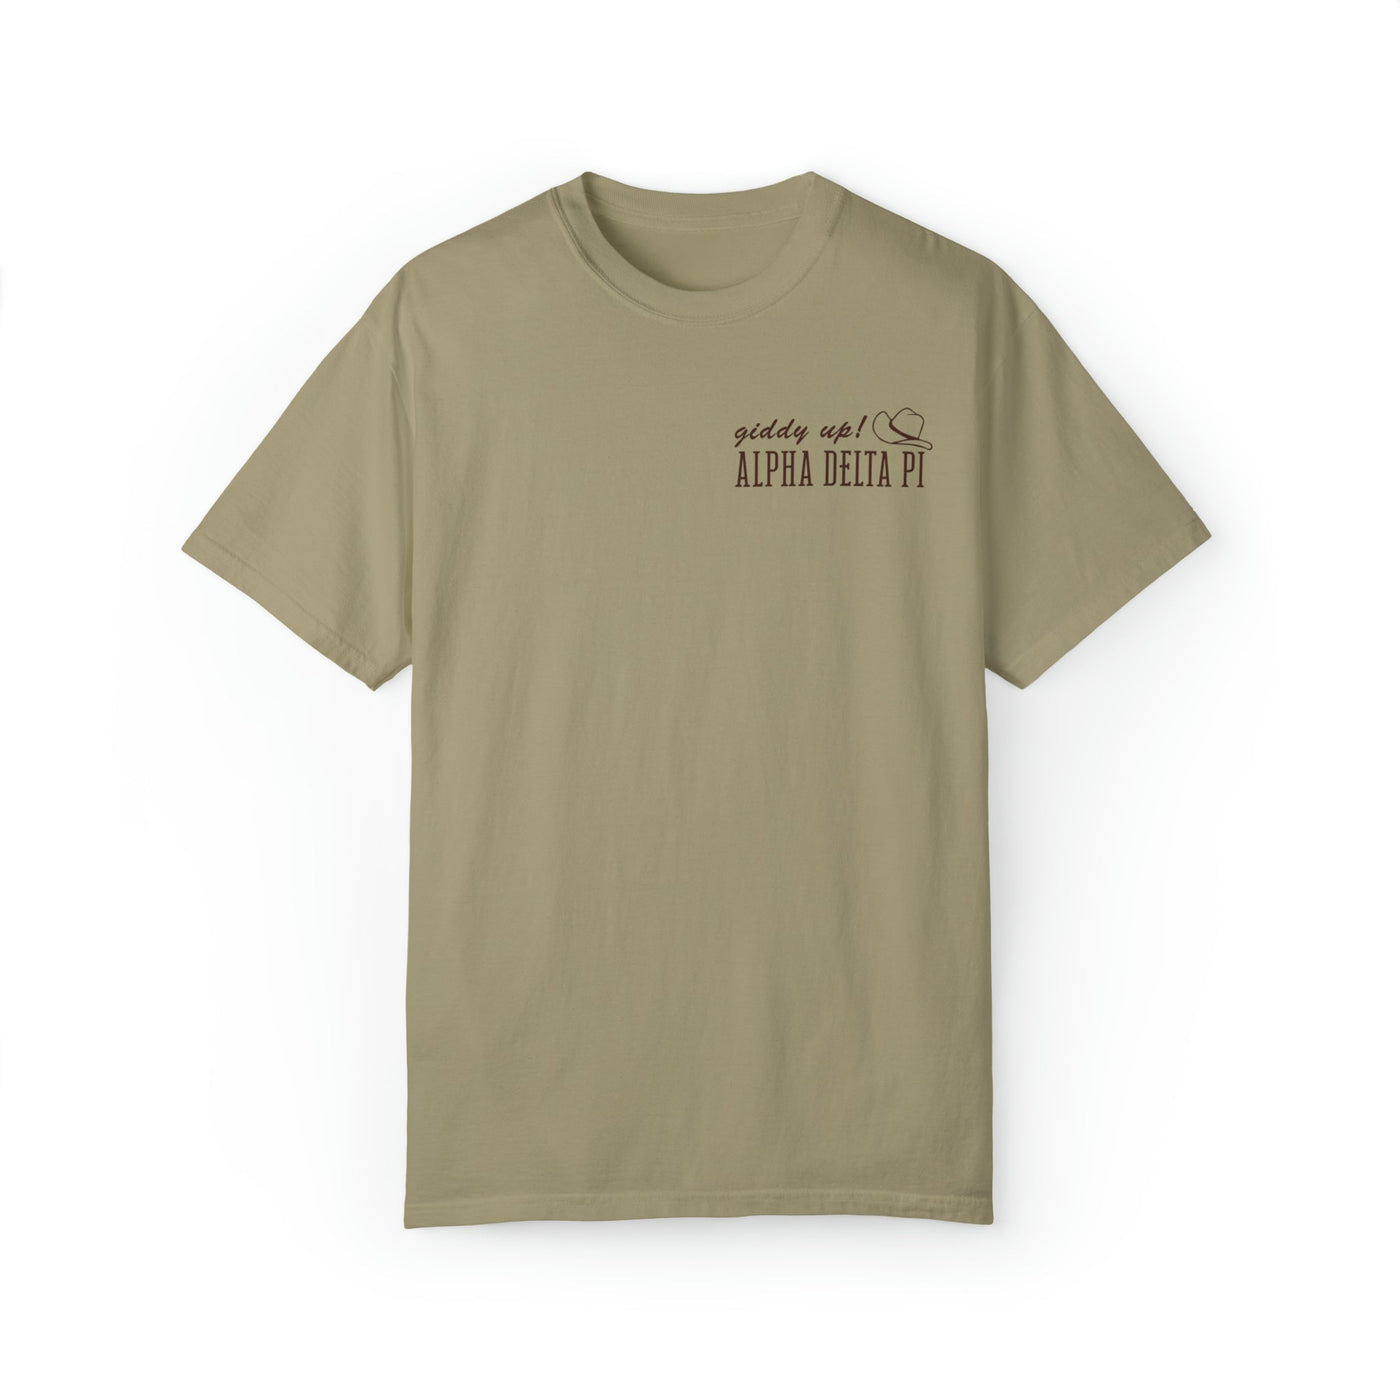 Alpha Delta Pi Country Western Sorority T-shirt